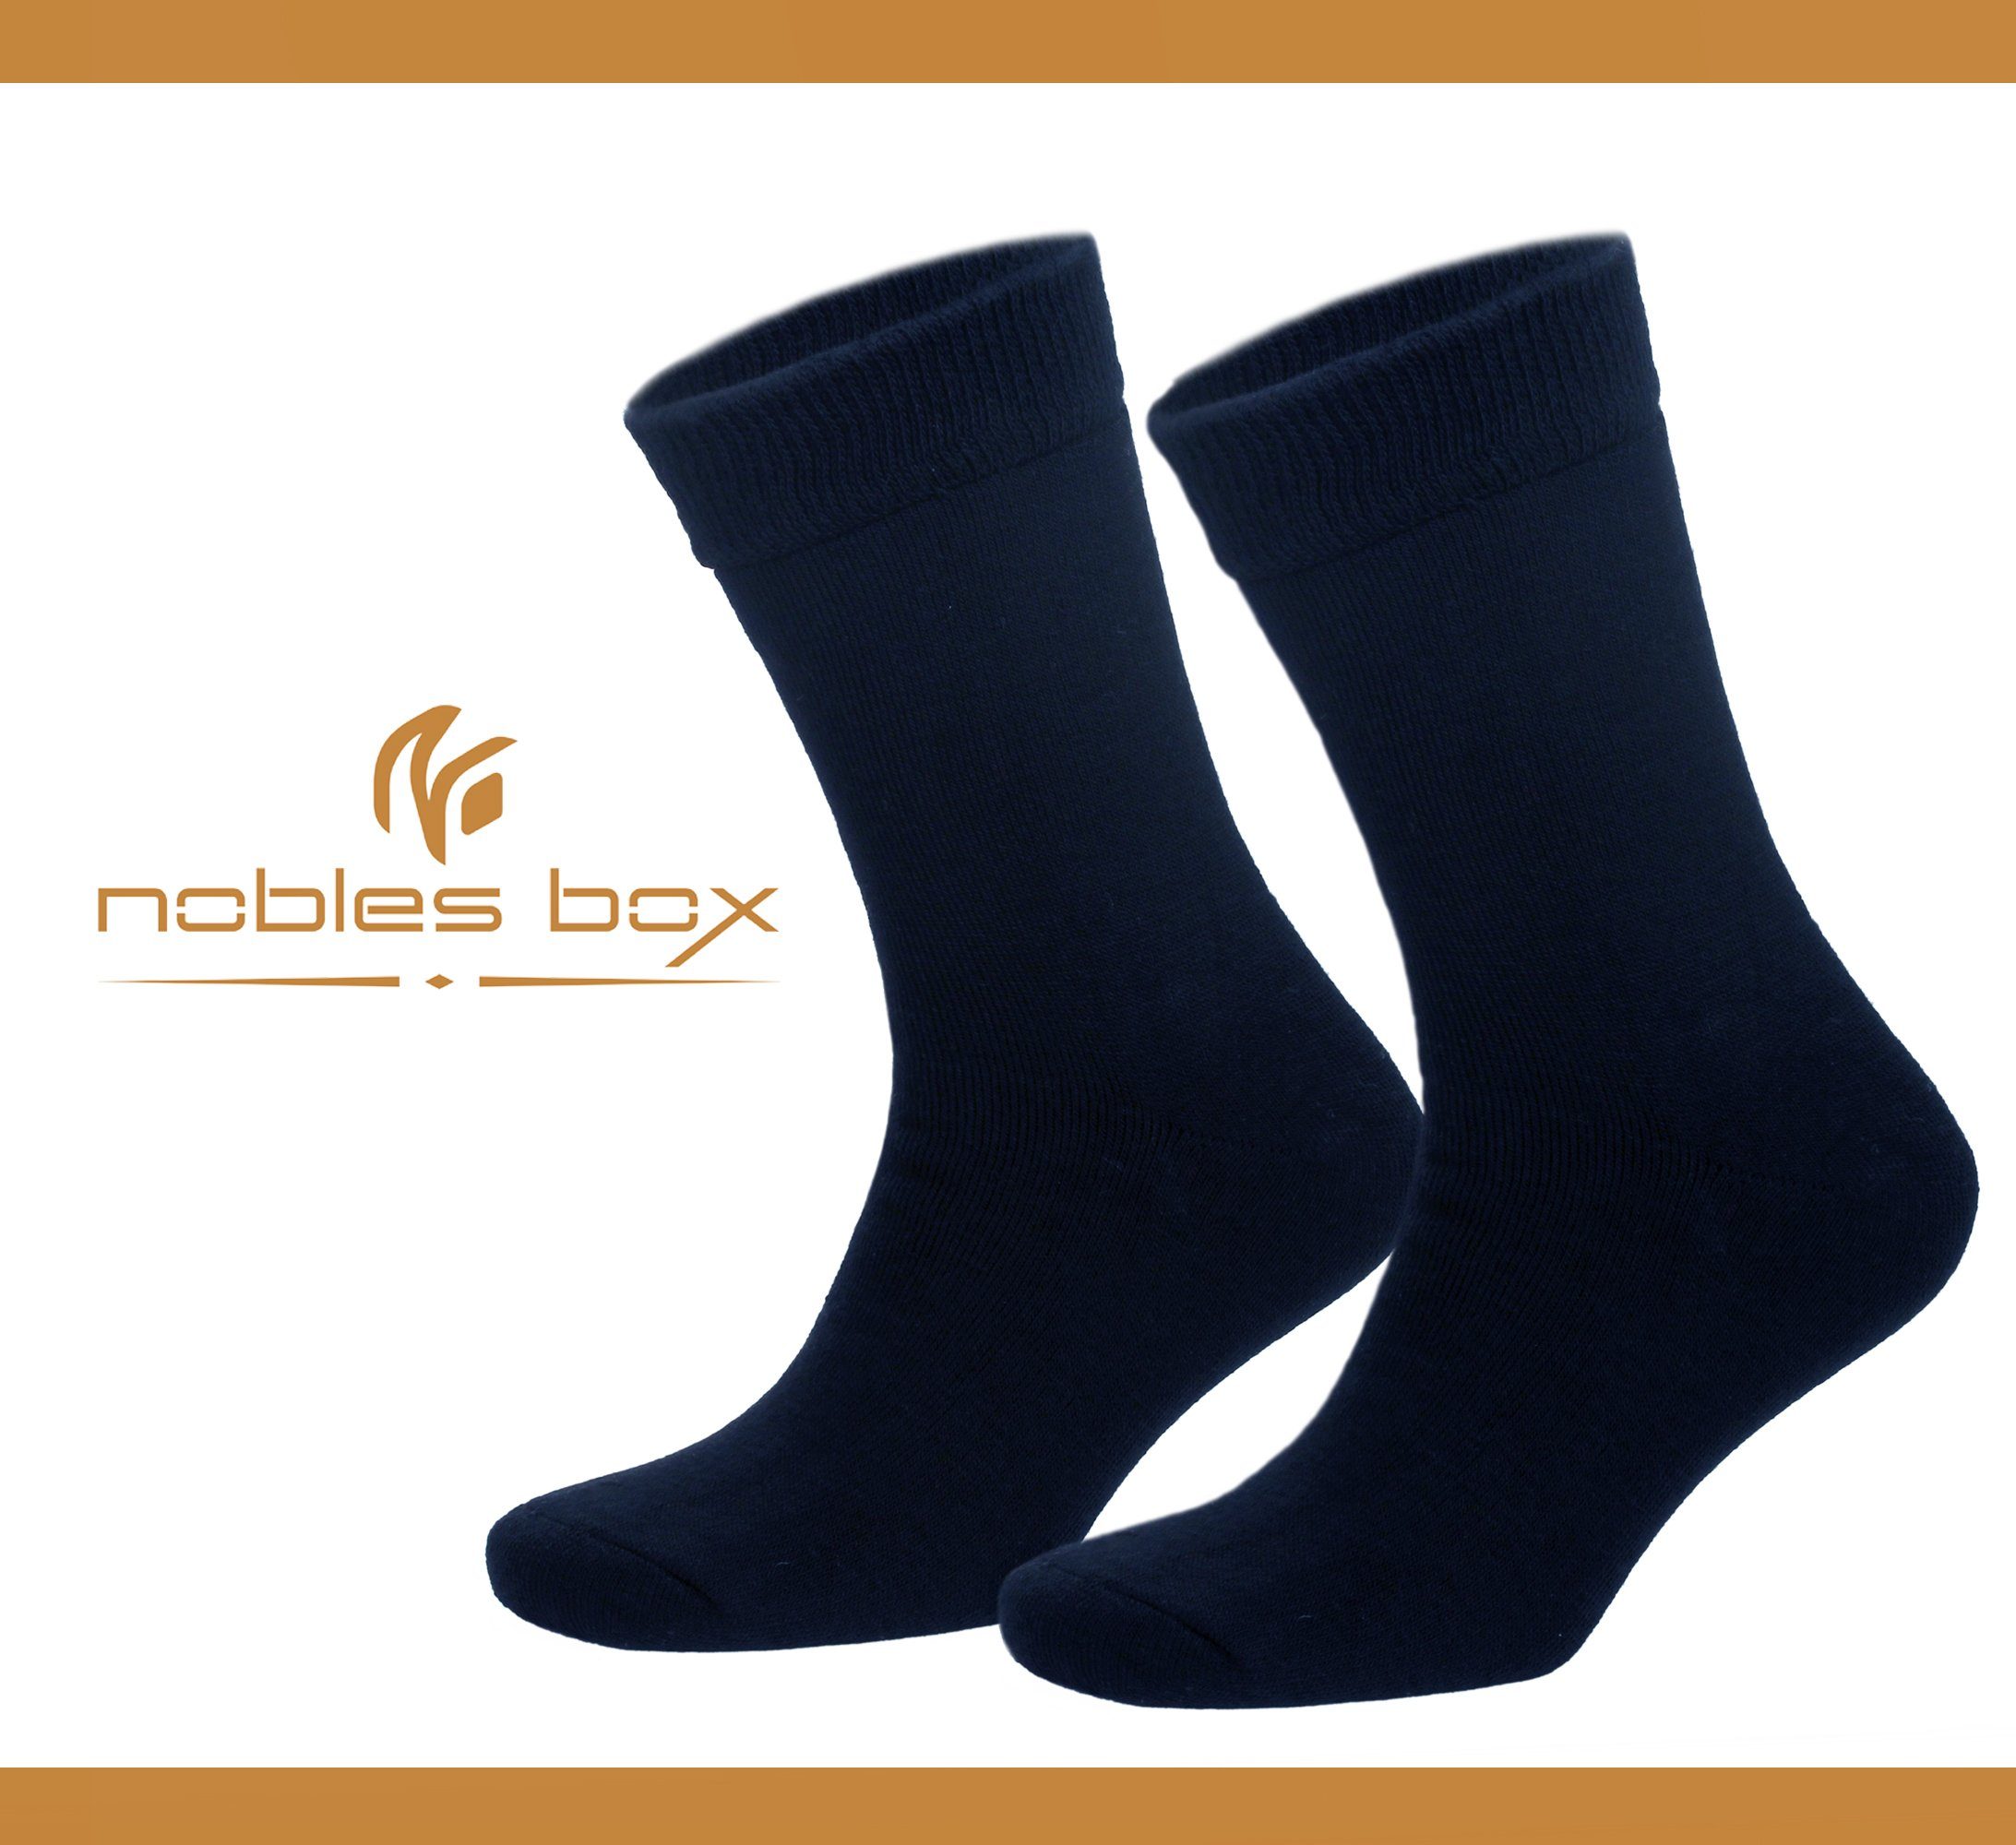 EU Warme NoblesBox Arbeitssocken Thermosocken Wintersocken Socken, Herren Blau Größe) (Beutel, Herren Herren 41-46 2-Paar,